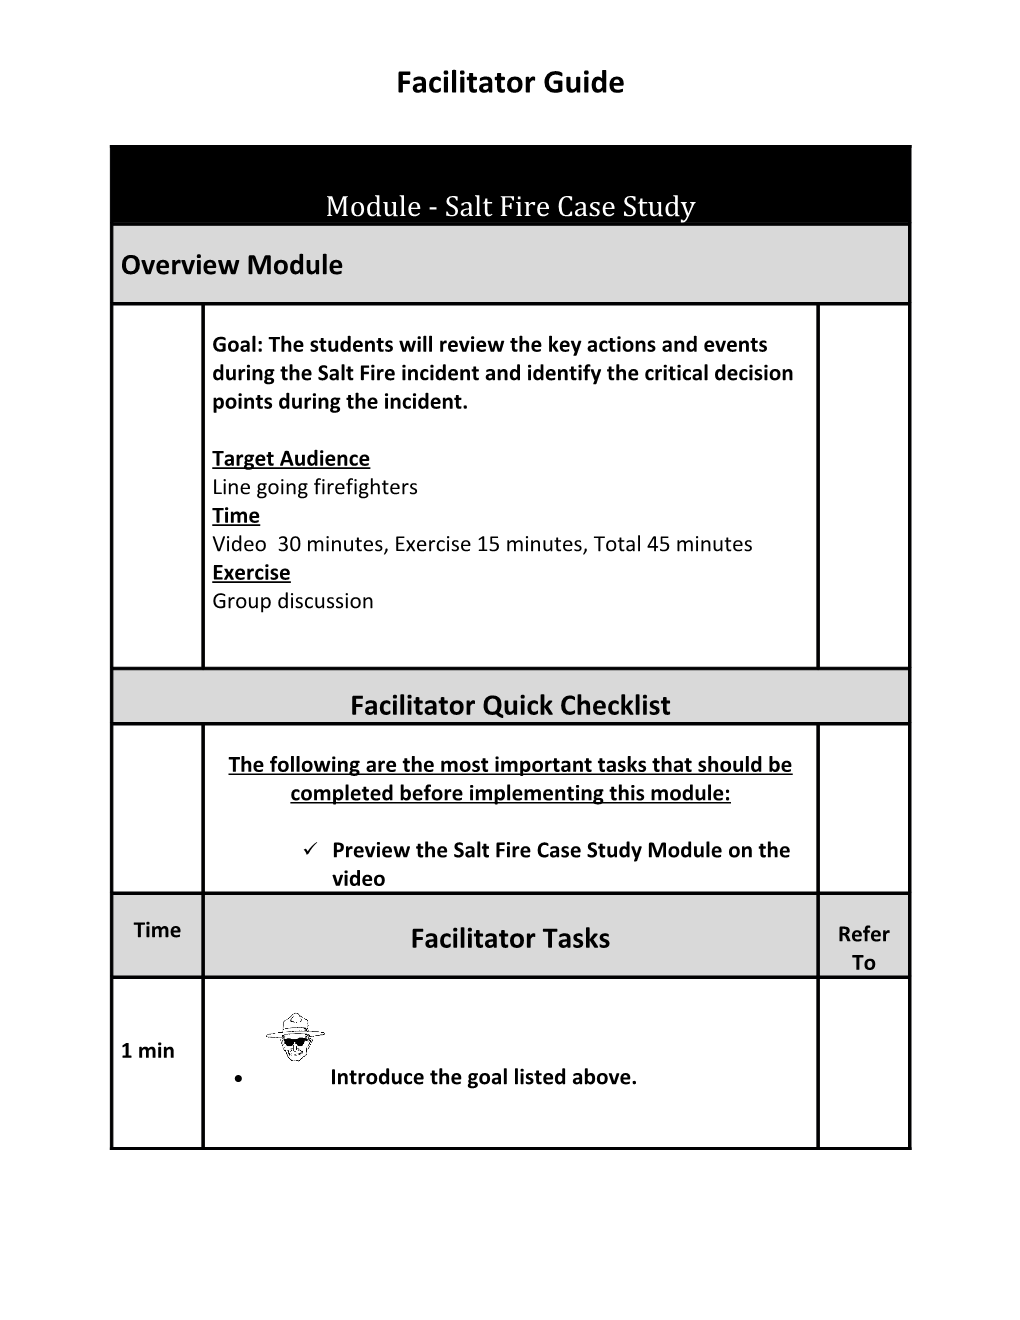 Module - Salt Fire Case Study